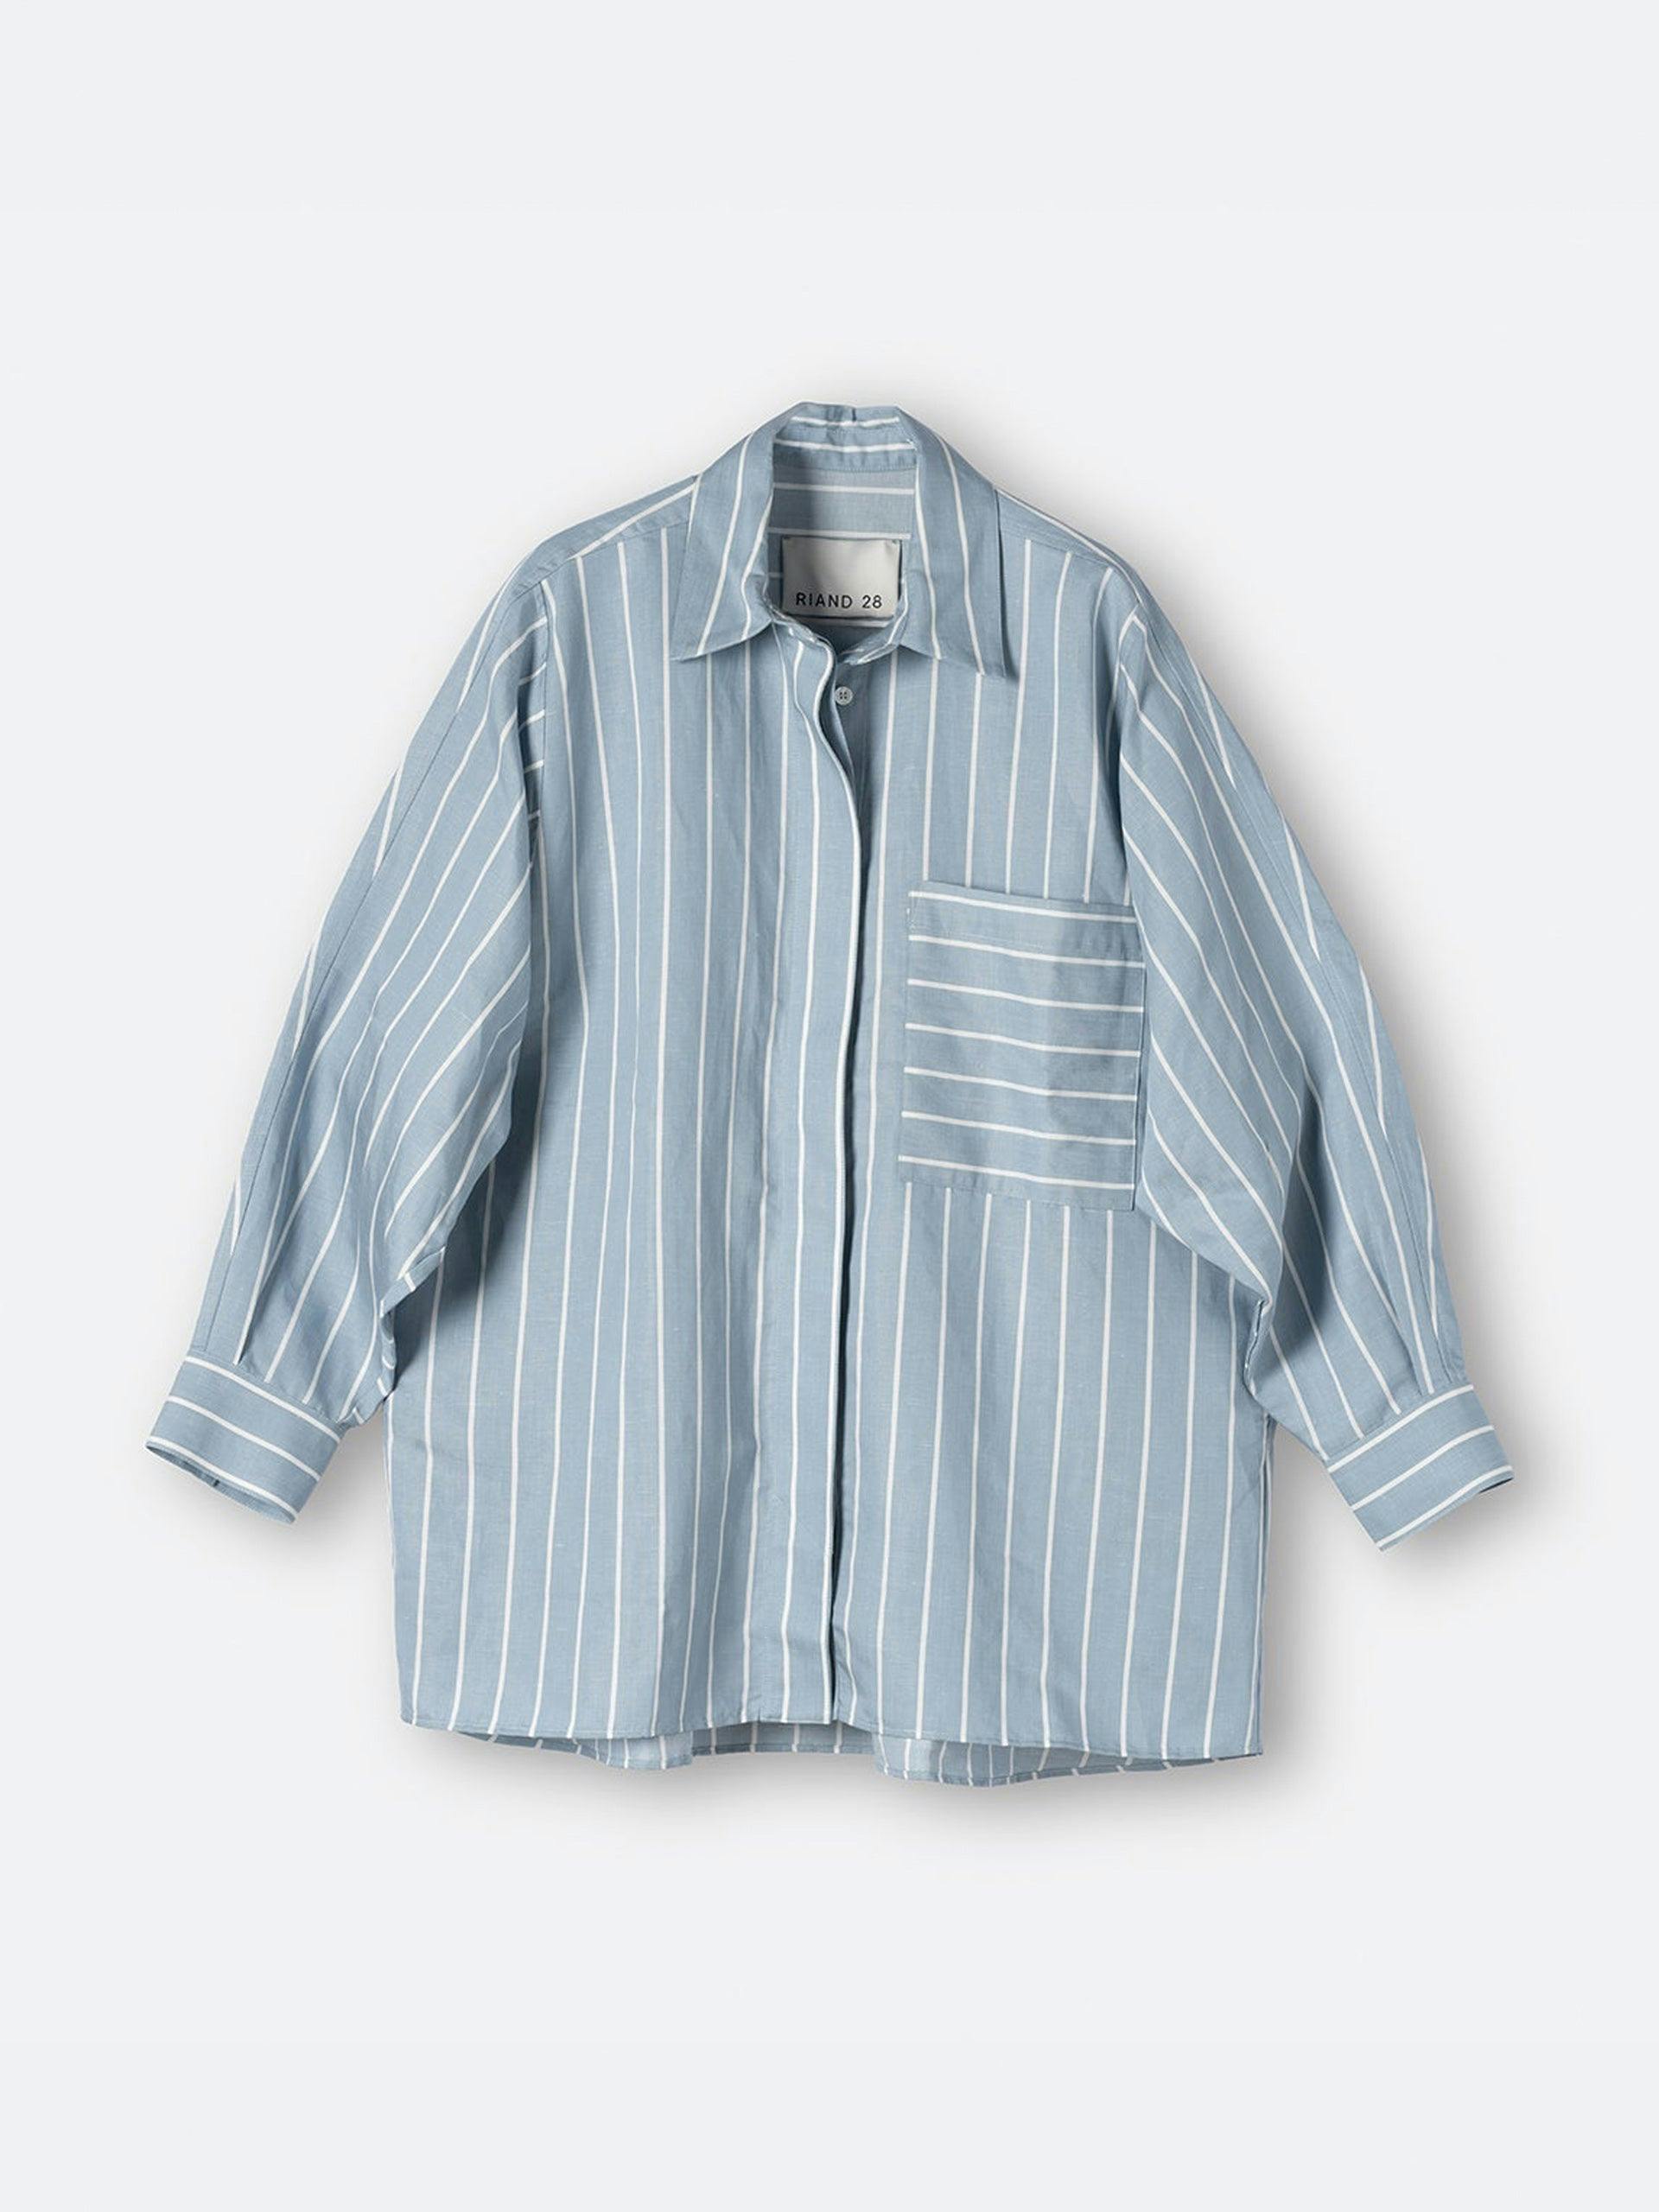 Stevie oversized shirt in blue and white stripe